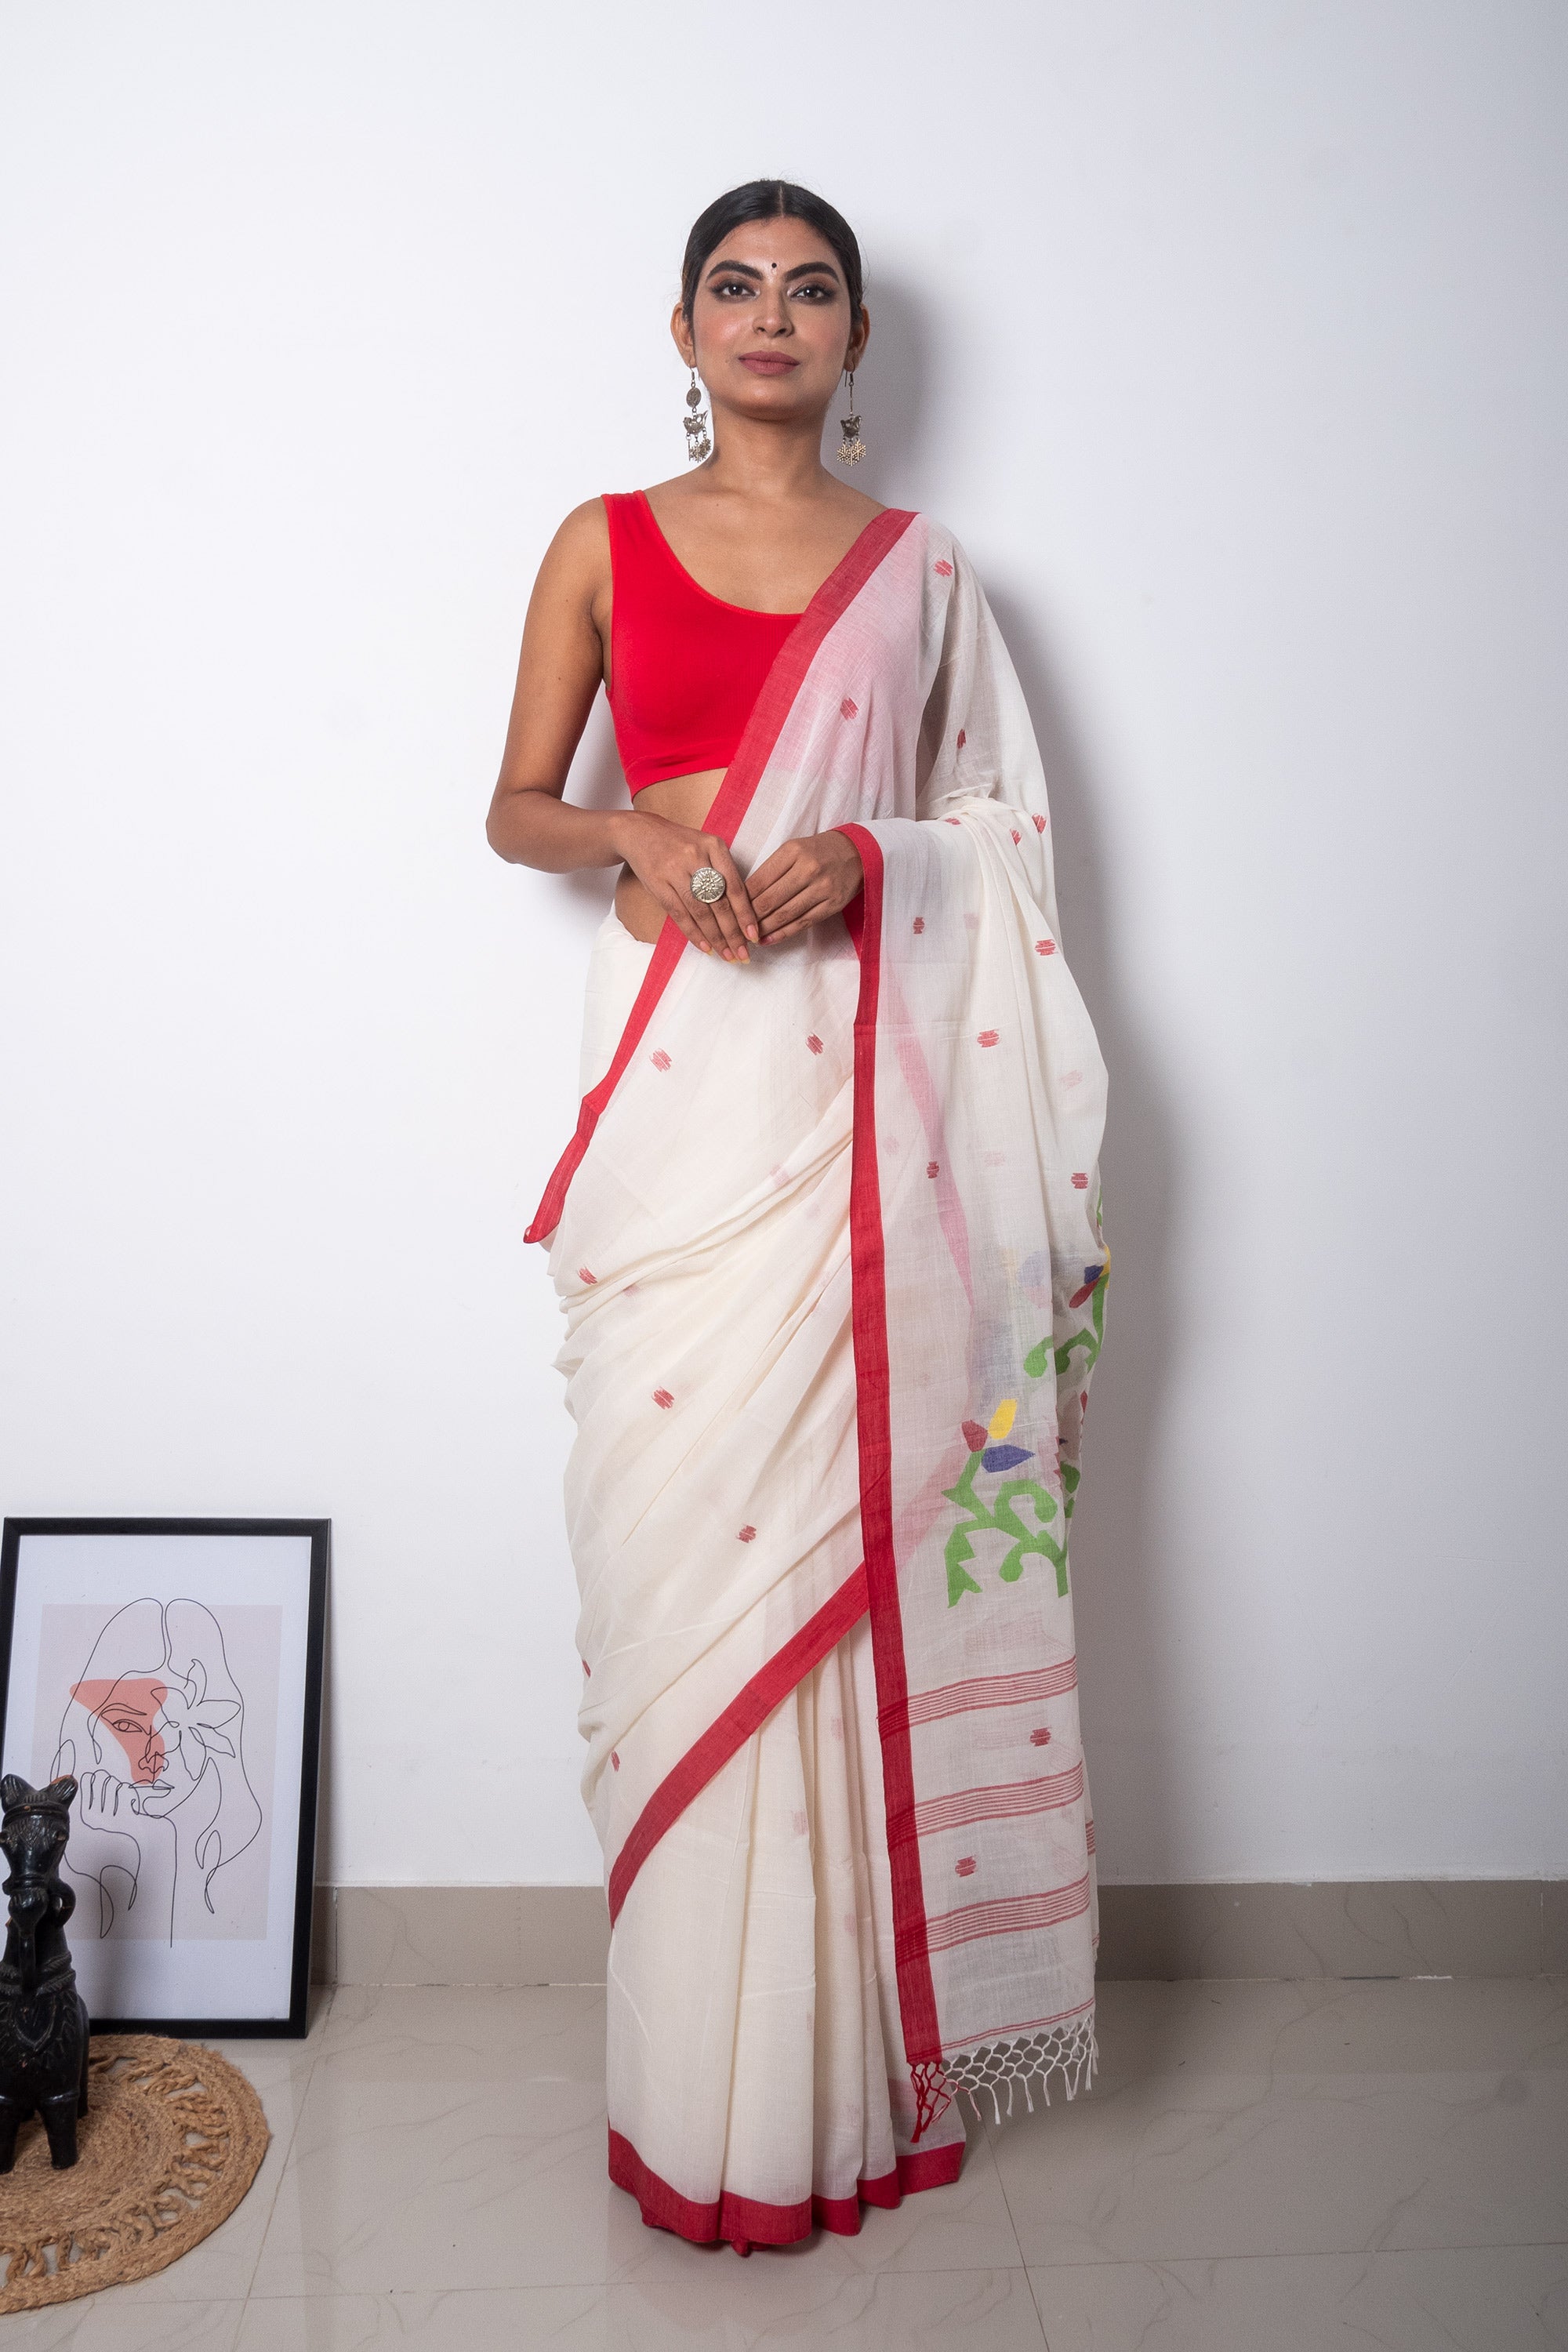 Exclusive Chaitra Sale Offers from Banarasi Niketan,Kolkata - Fashionmantra  - Quora